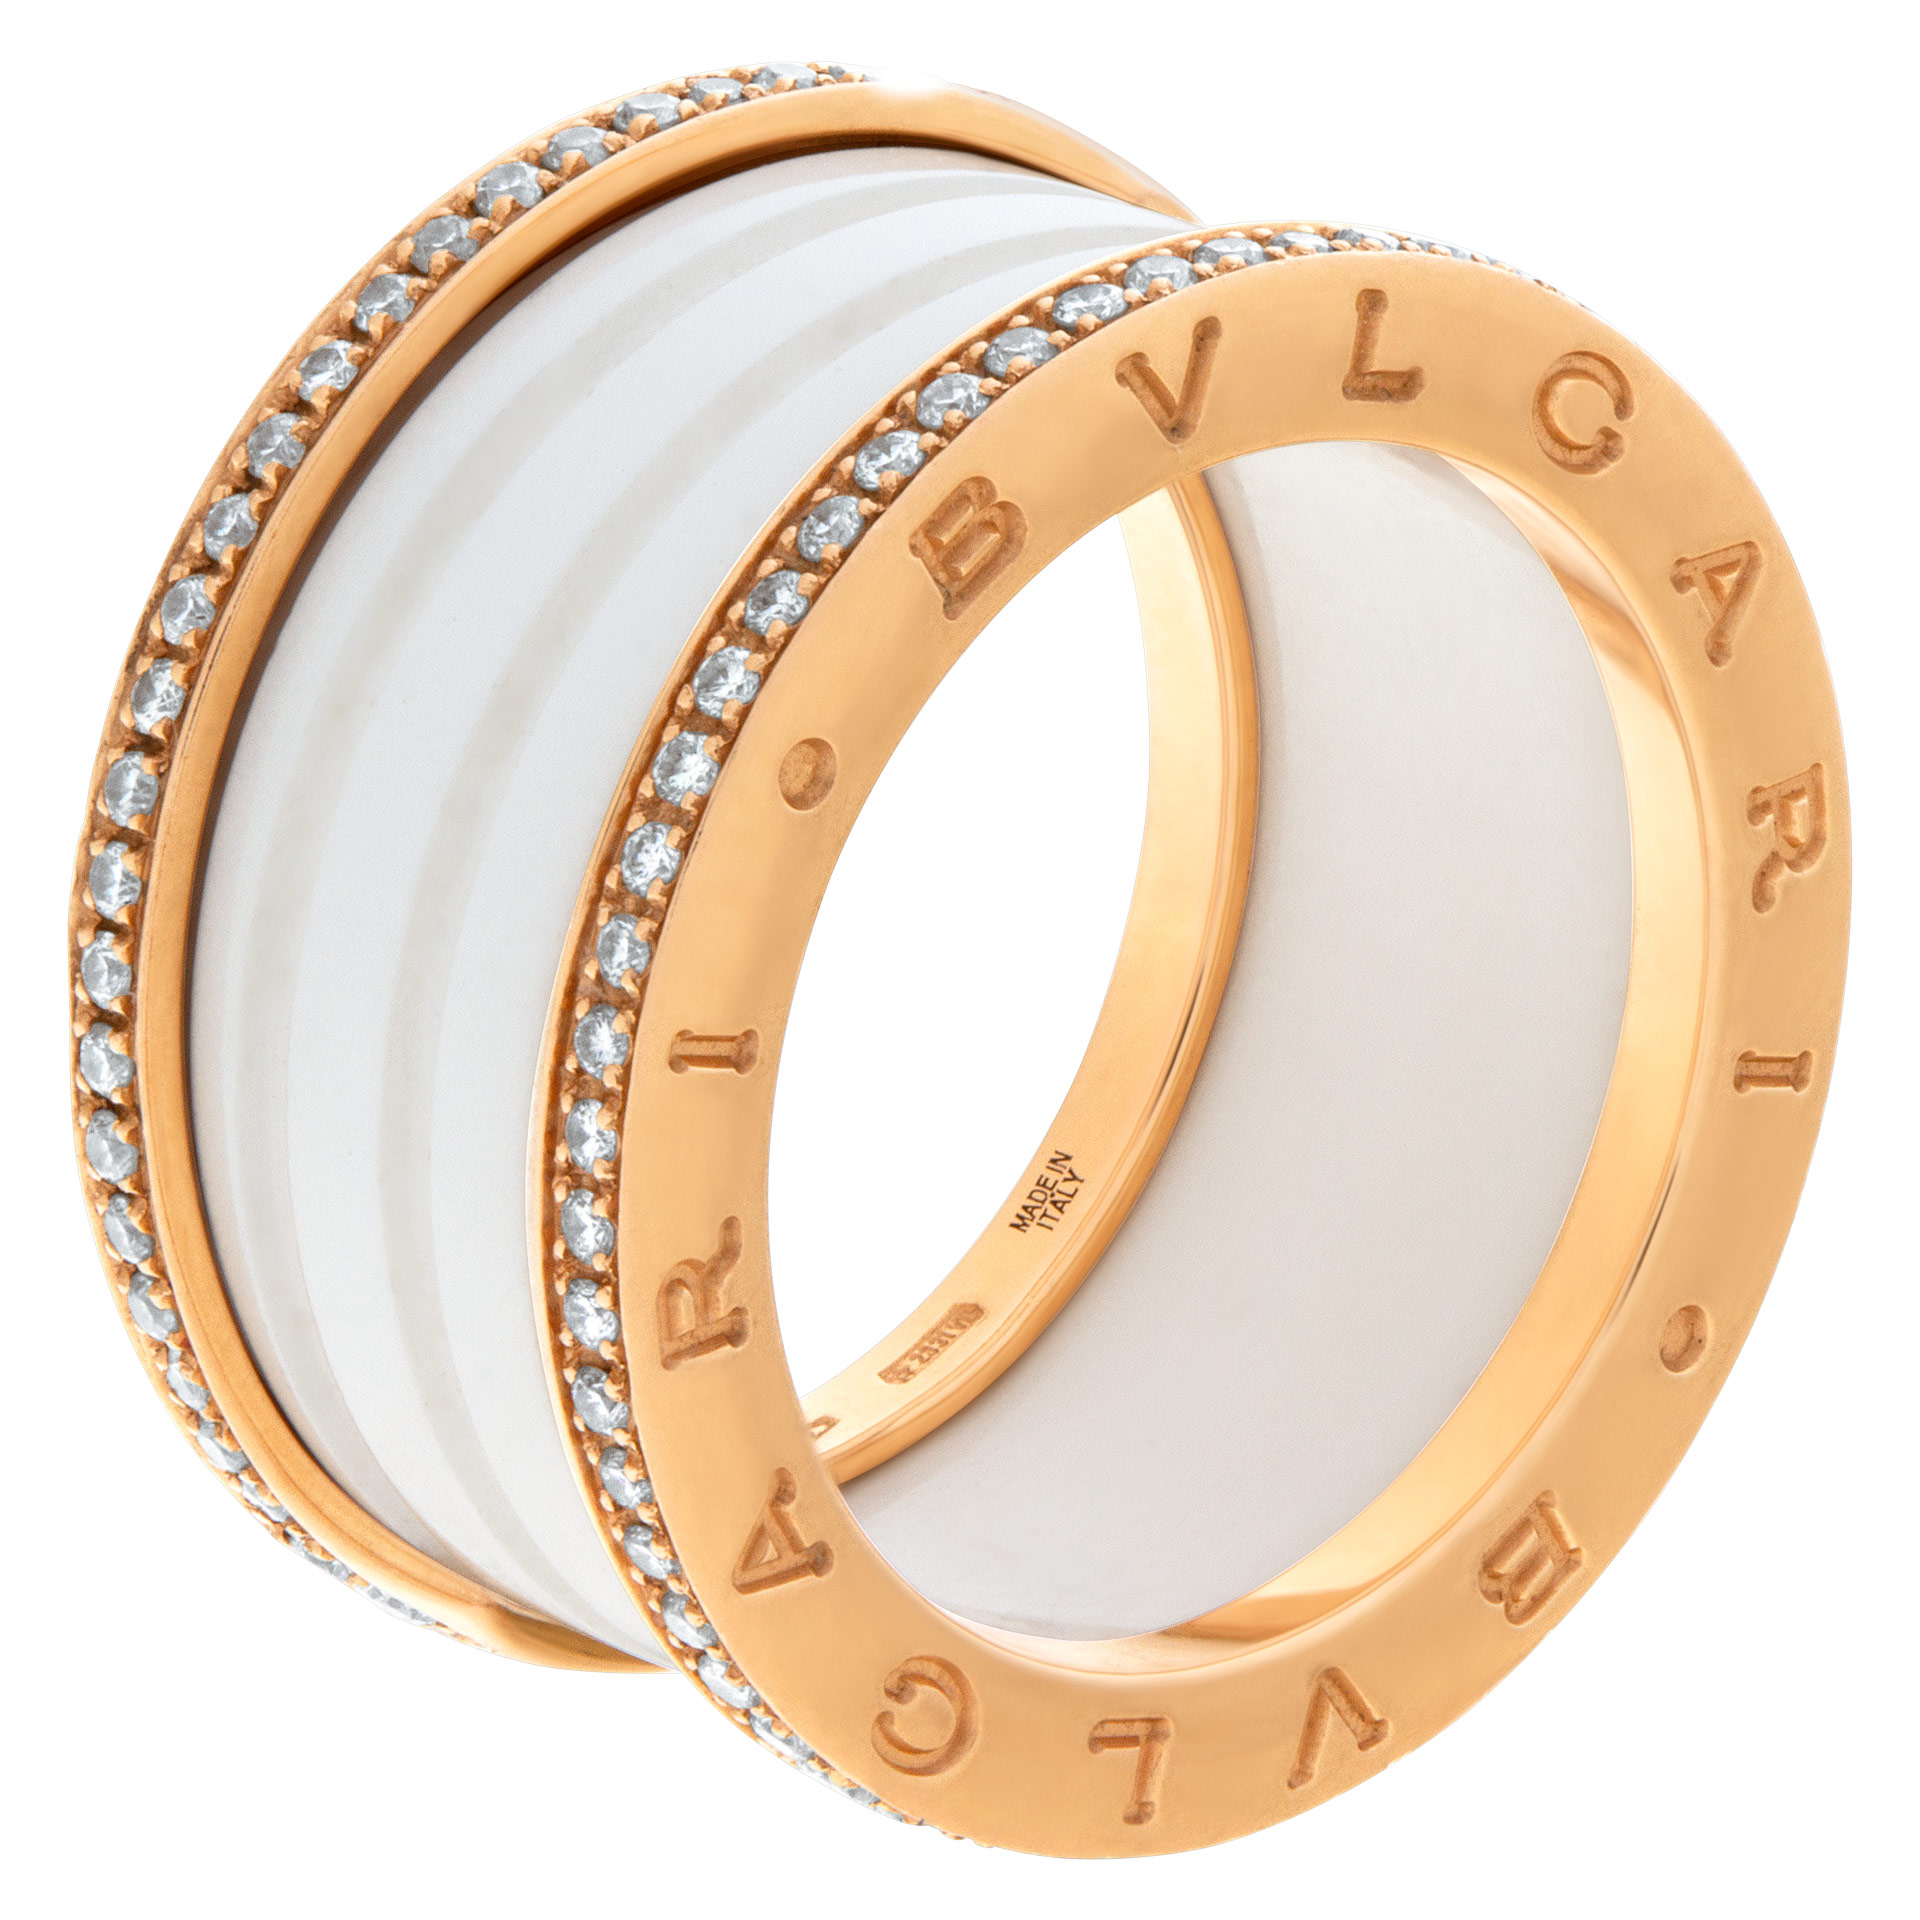 bulgari gold and ceramic ring